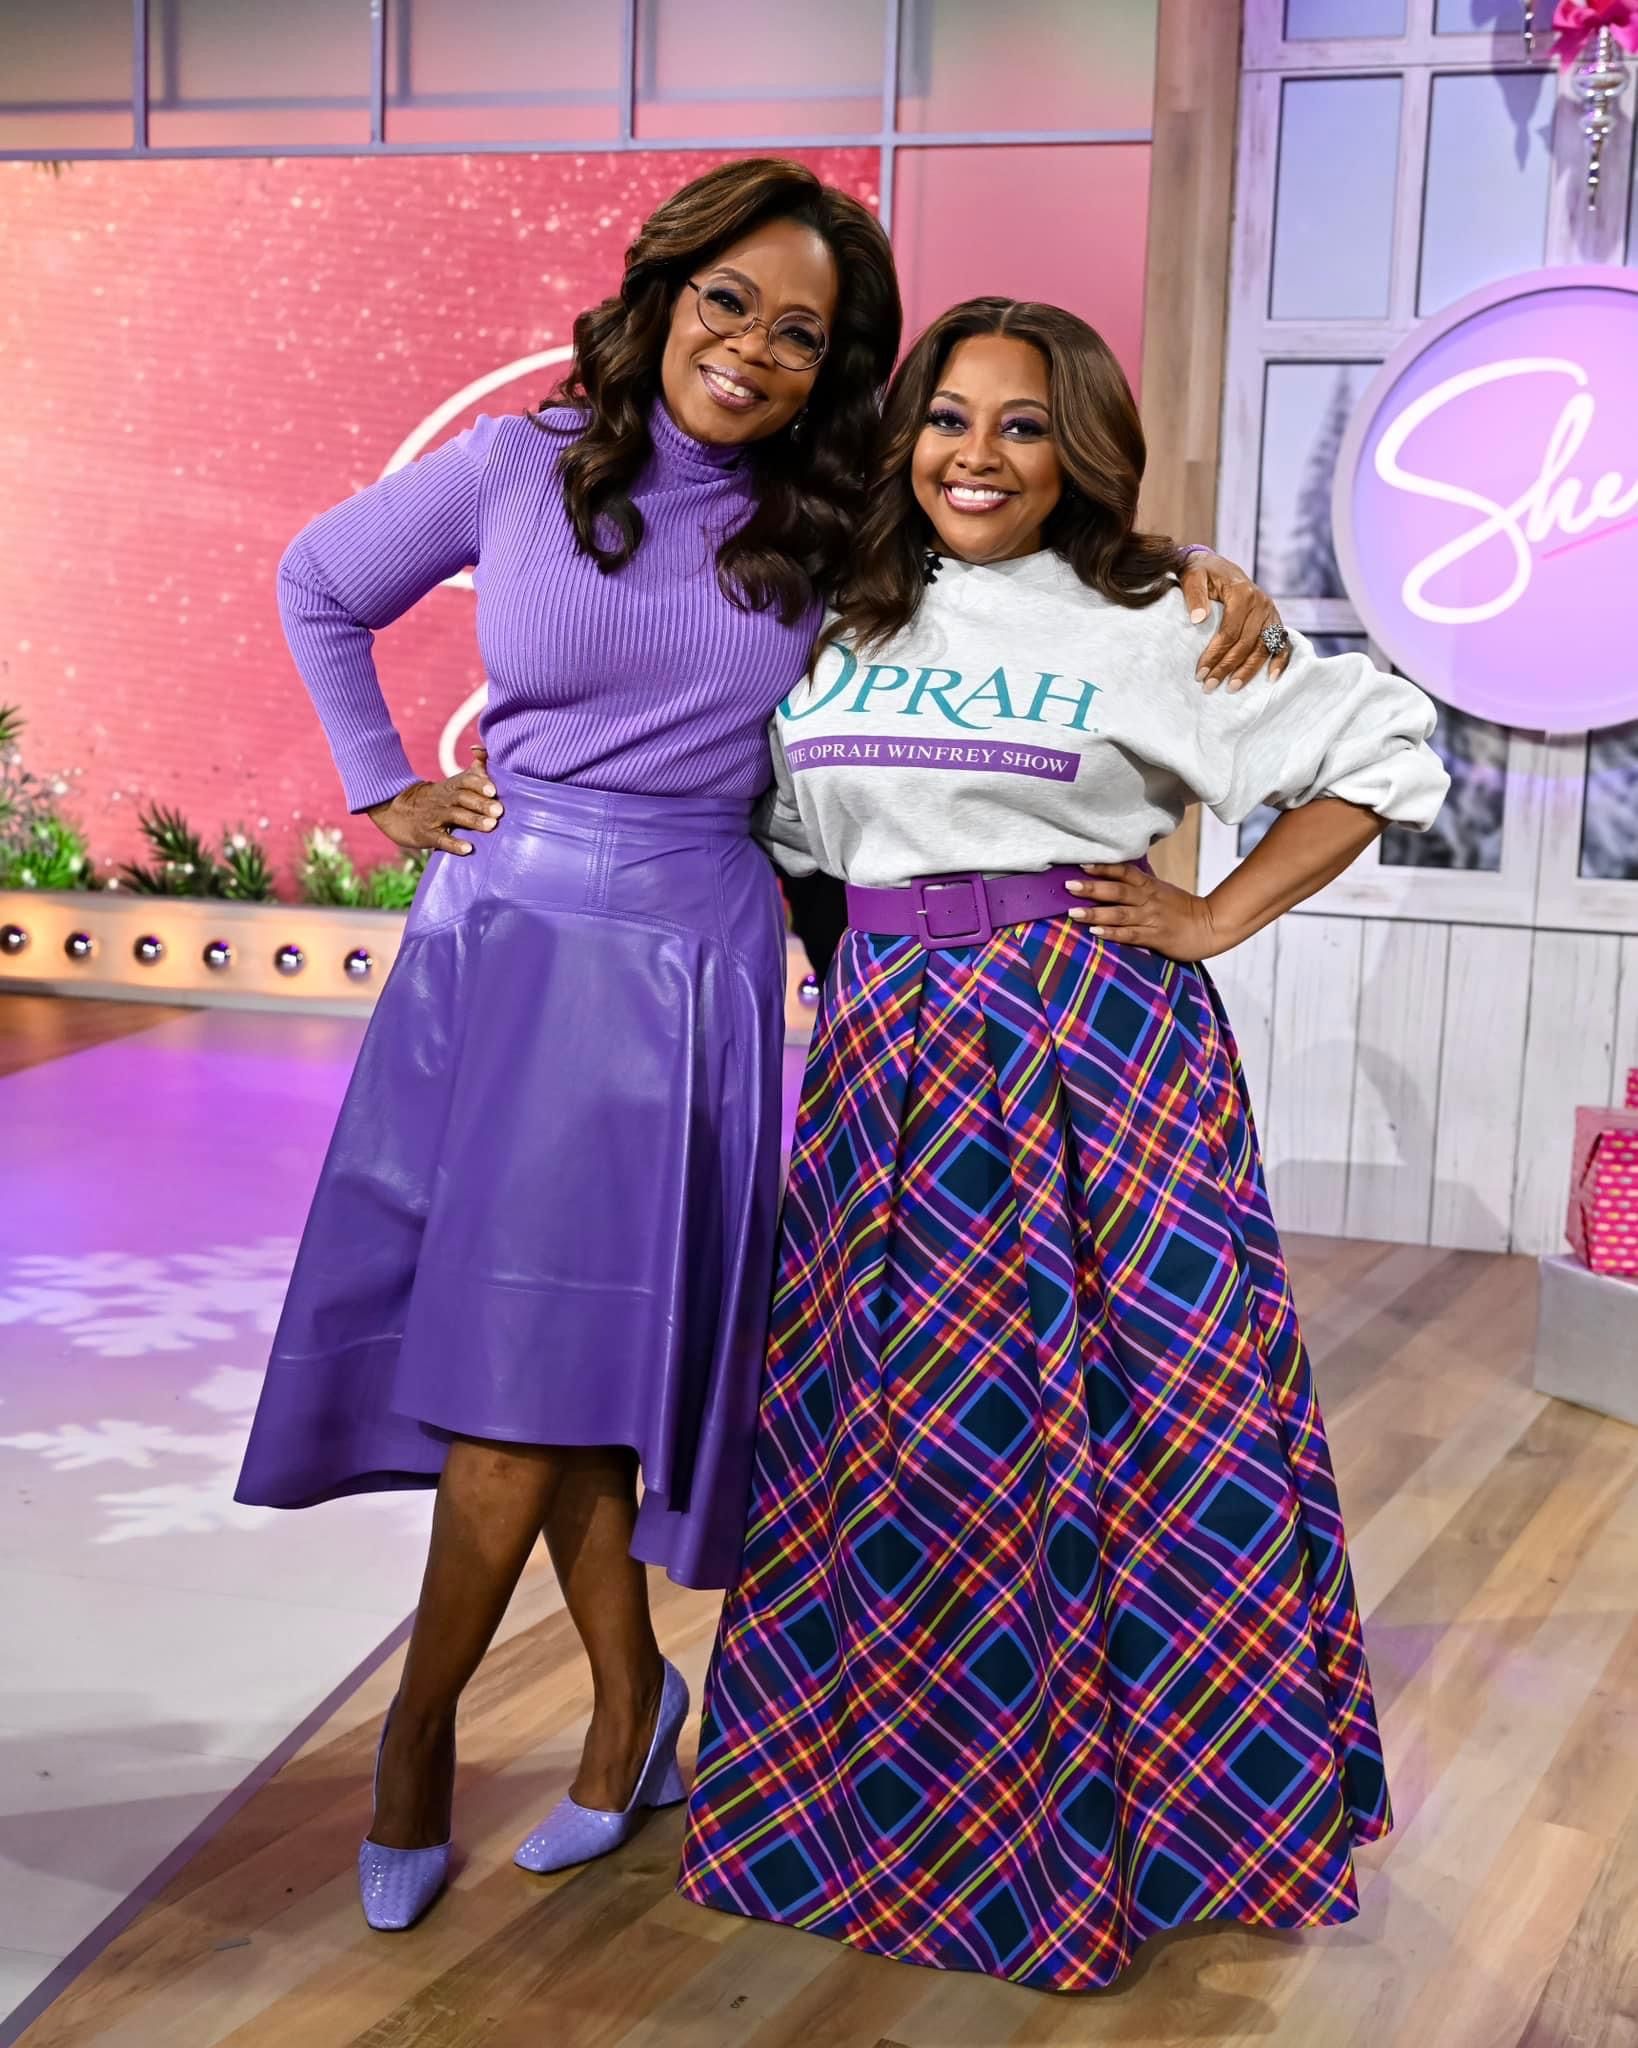 Wardrobe Breakdown: Oprah Winfrey In Purple Leather Skirt  & Sherri In Vintage Oprah Sweatshirt & Plaid Ball Skirt